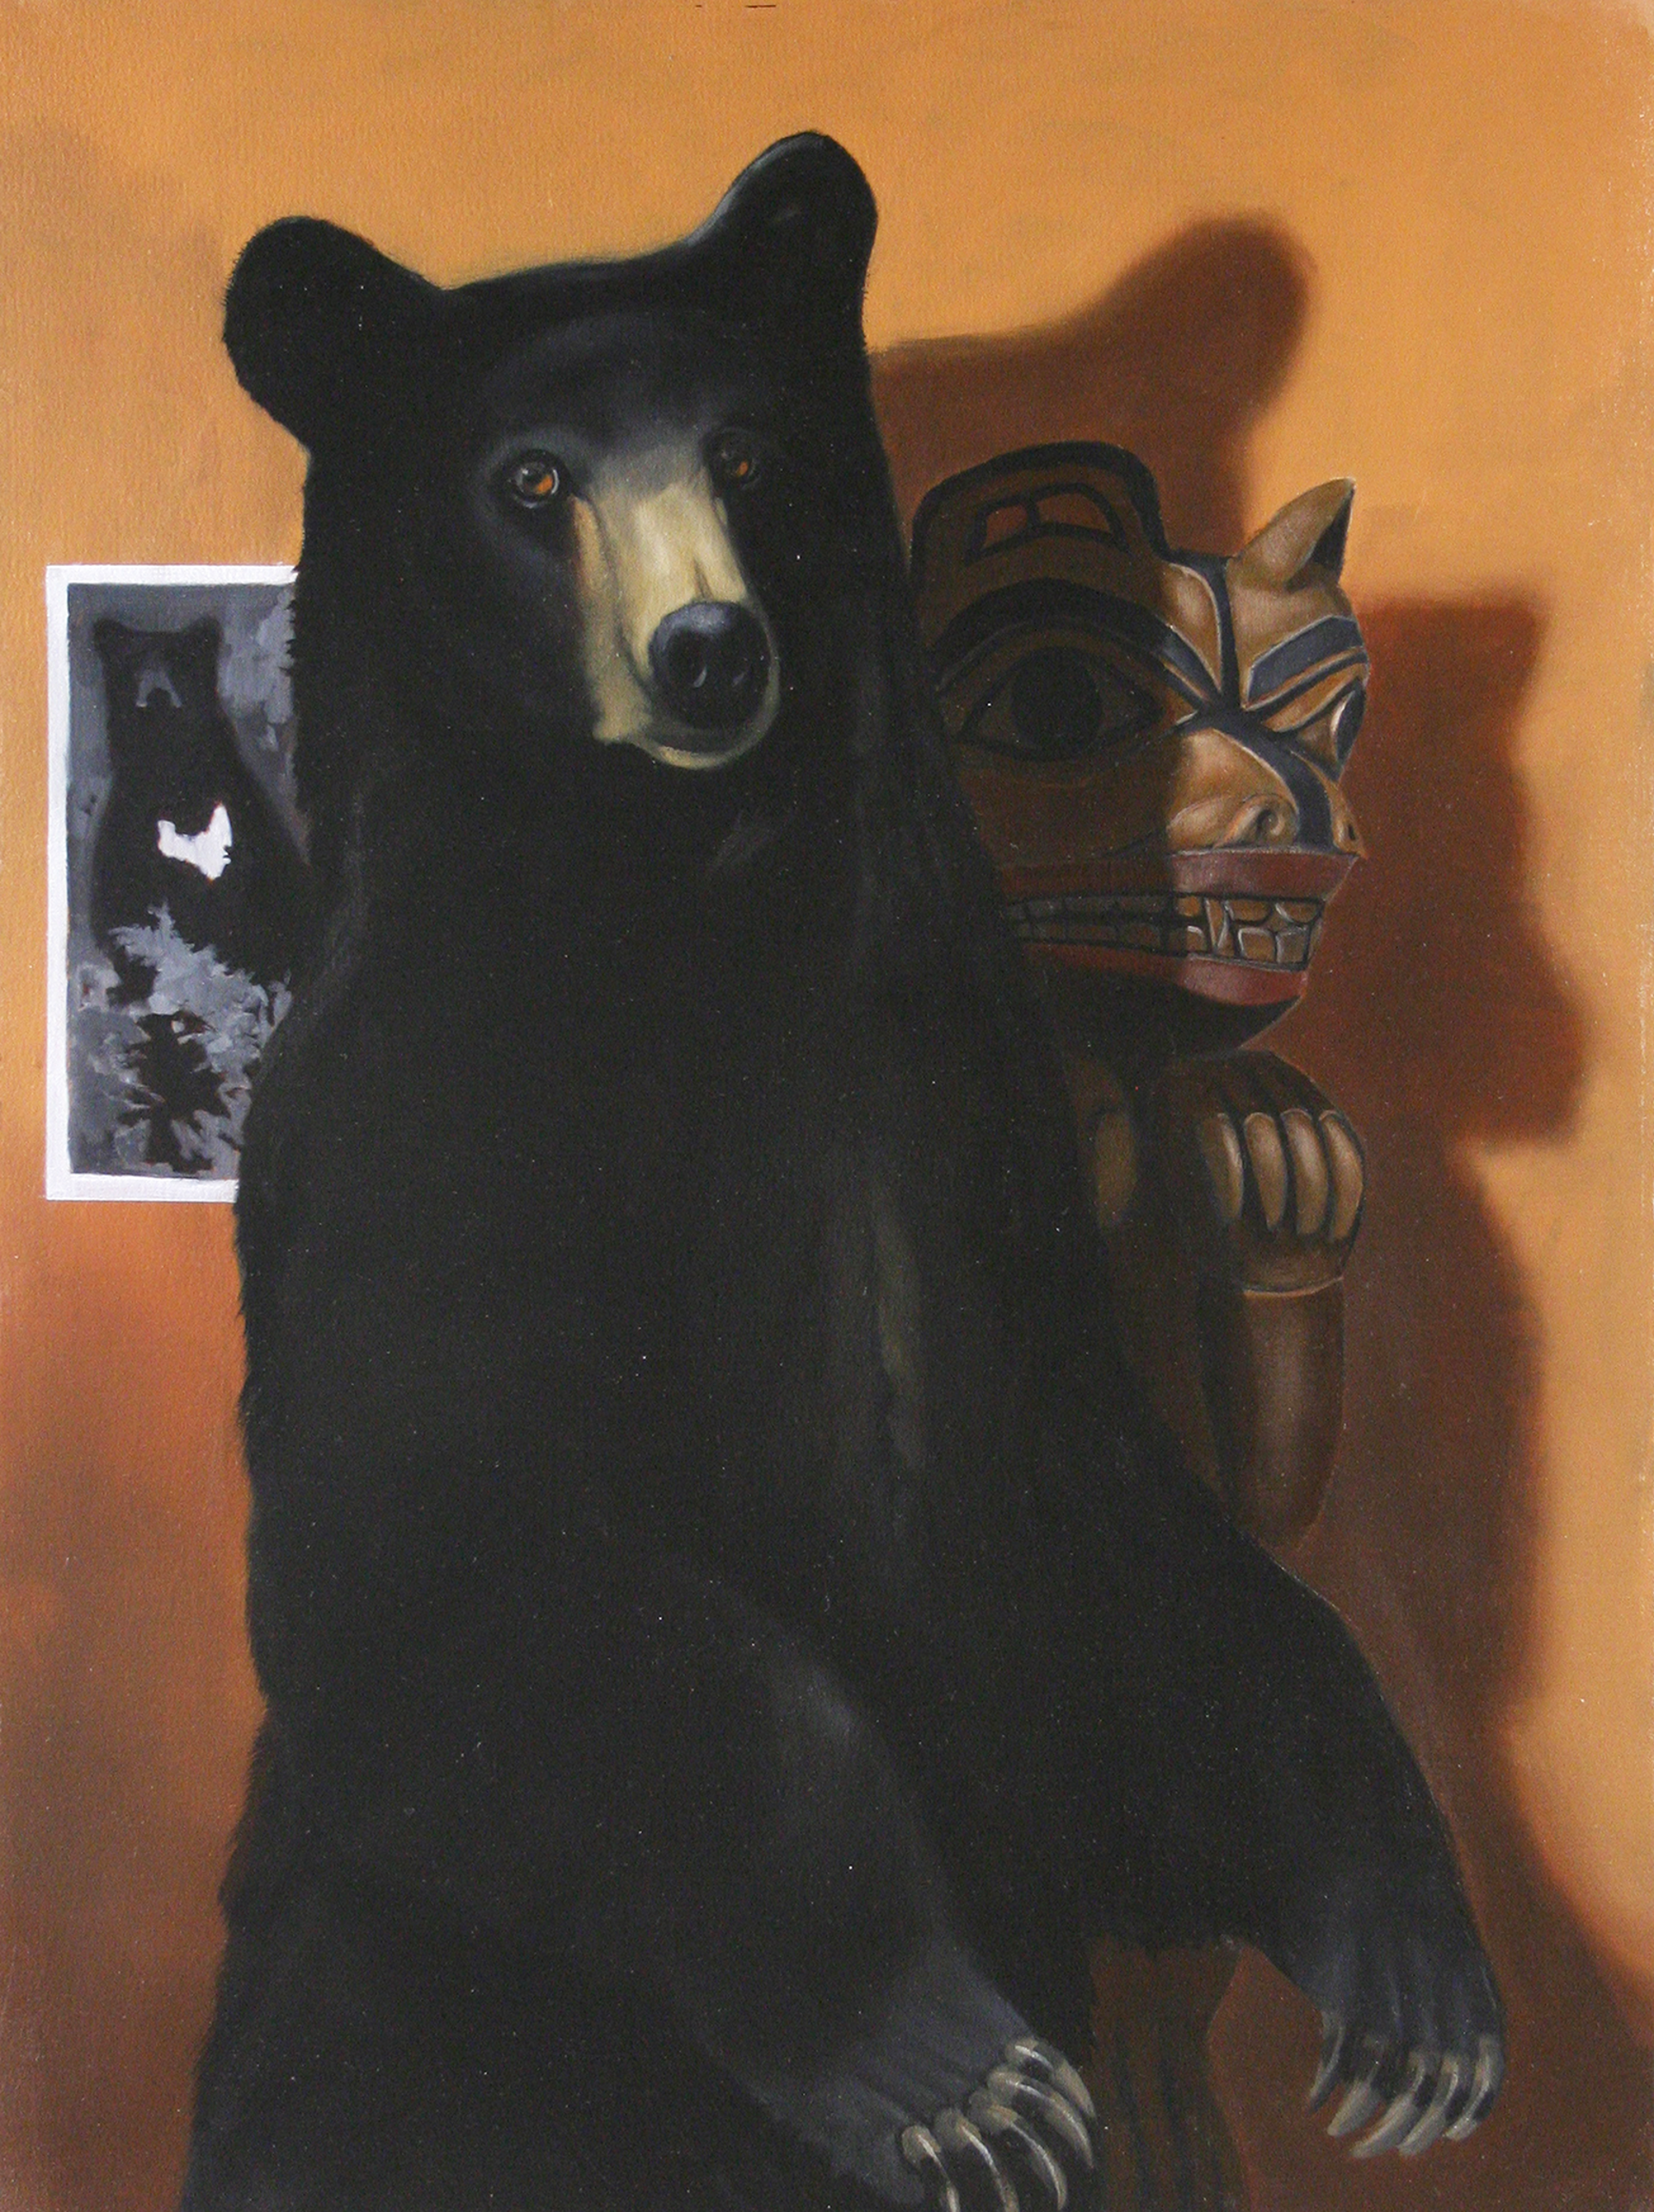 One and Three Bears (After Kosuth) by Robert McCauley